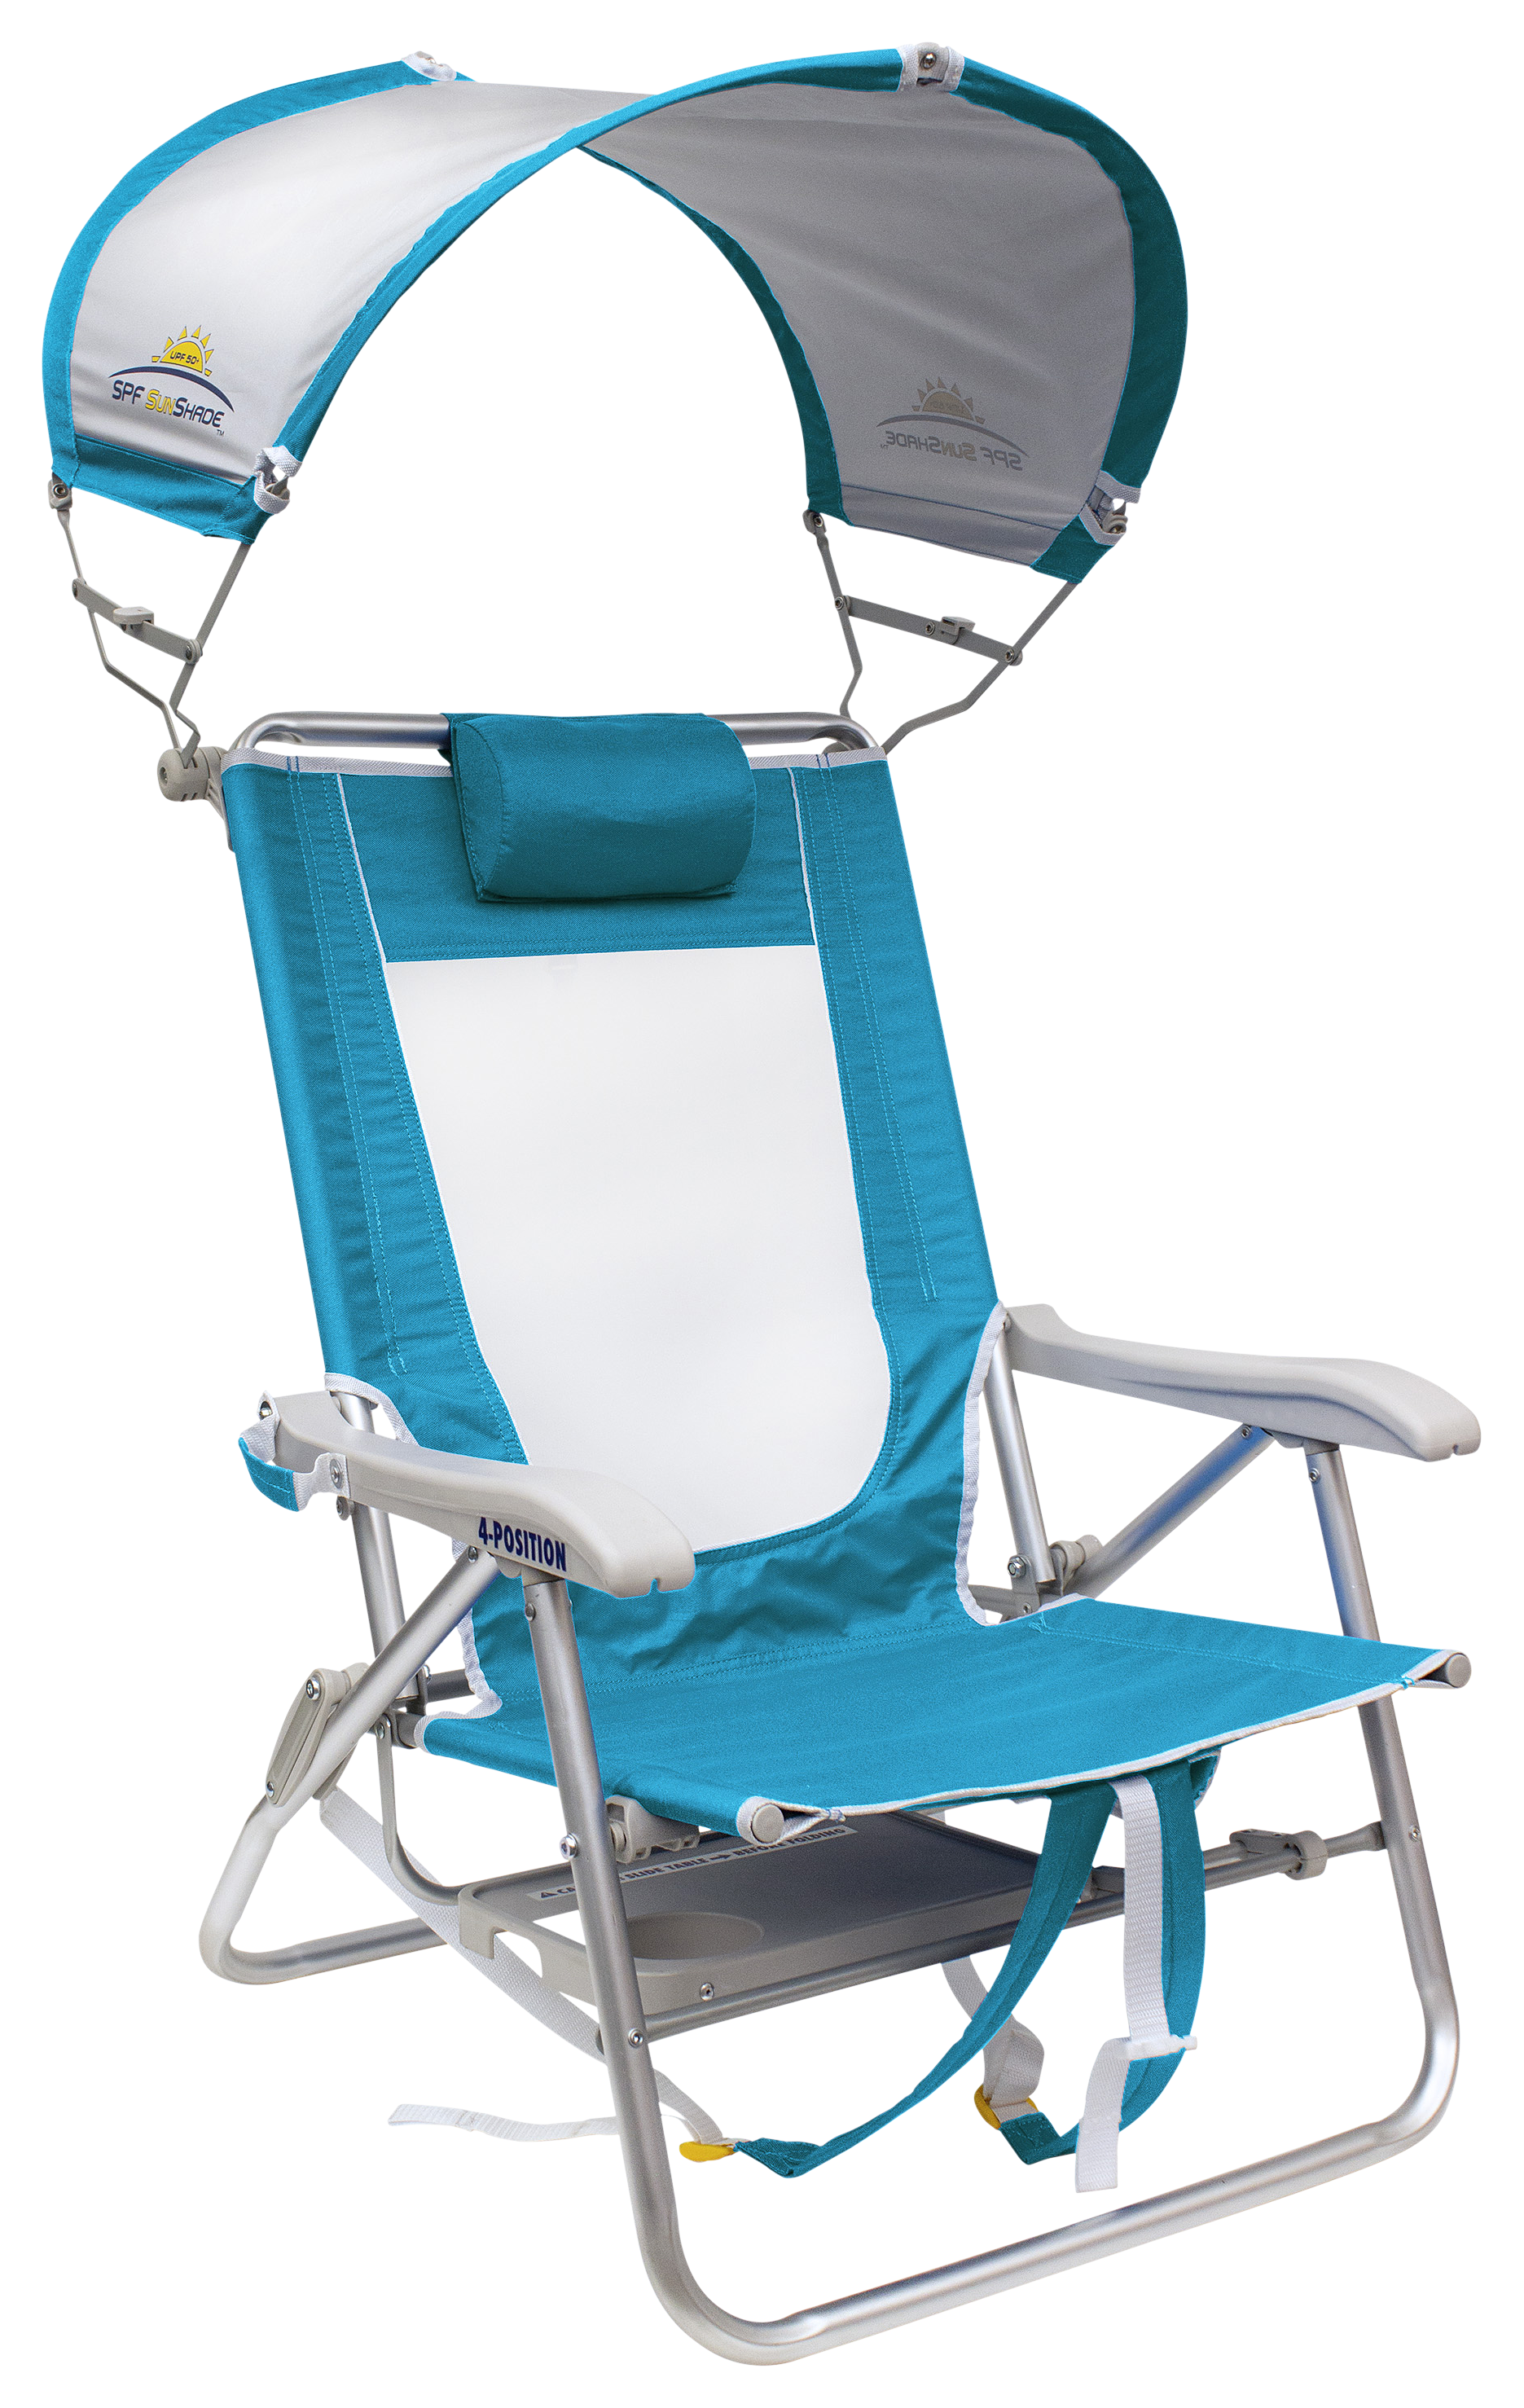 GCI OUTDOOR SunShade™ Backpack Beach Chair